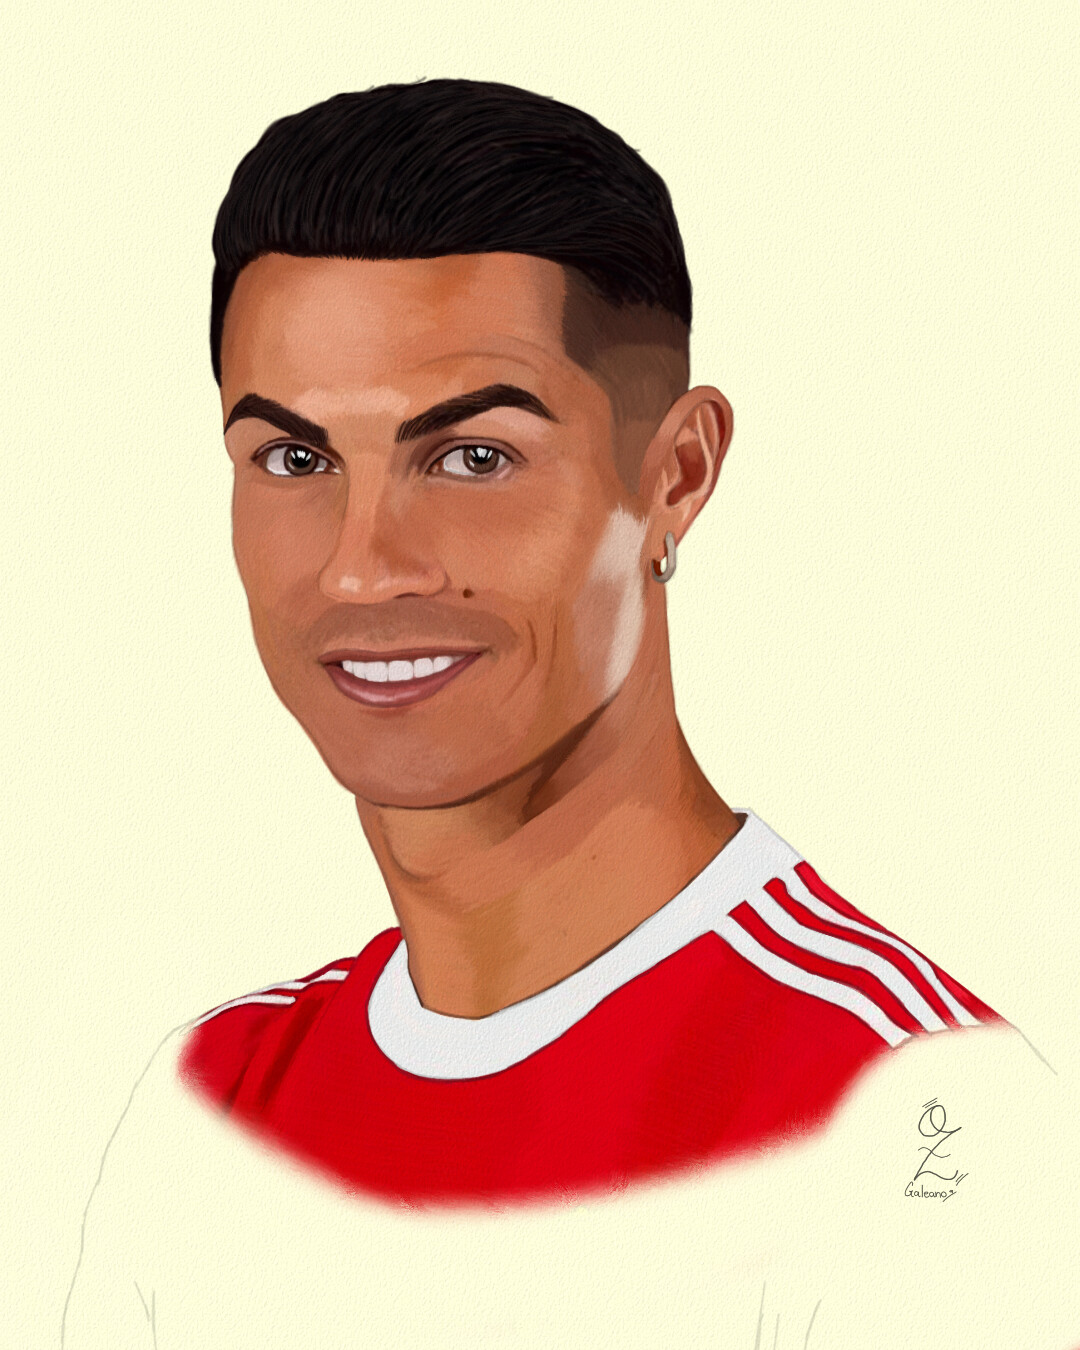 ArtStation - Cristiano Ronaldo Portrait drawing by Oz Galeano